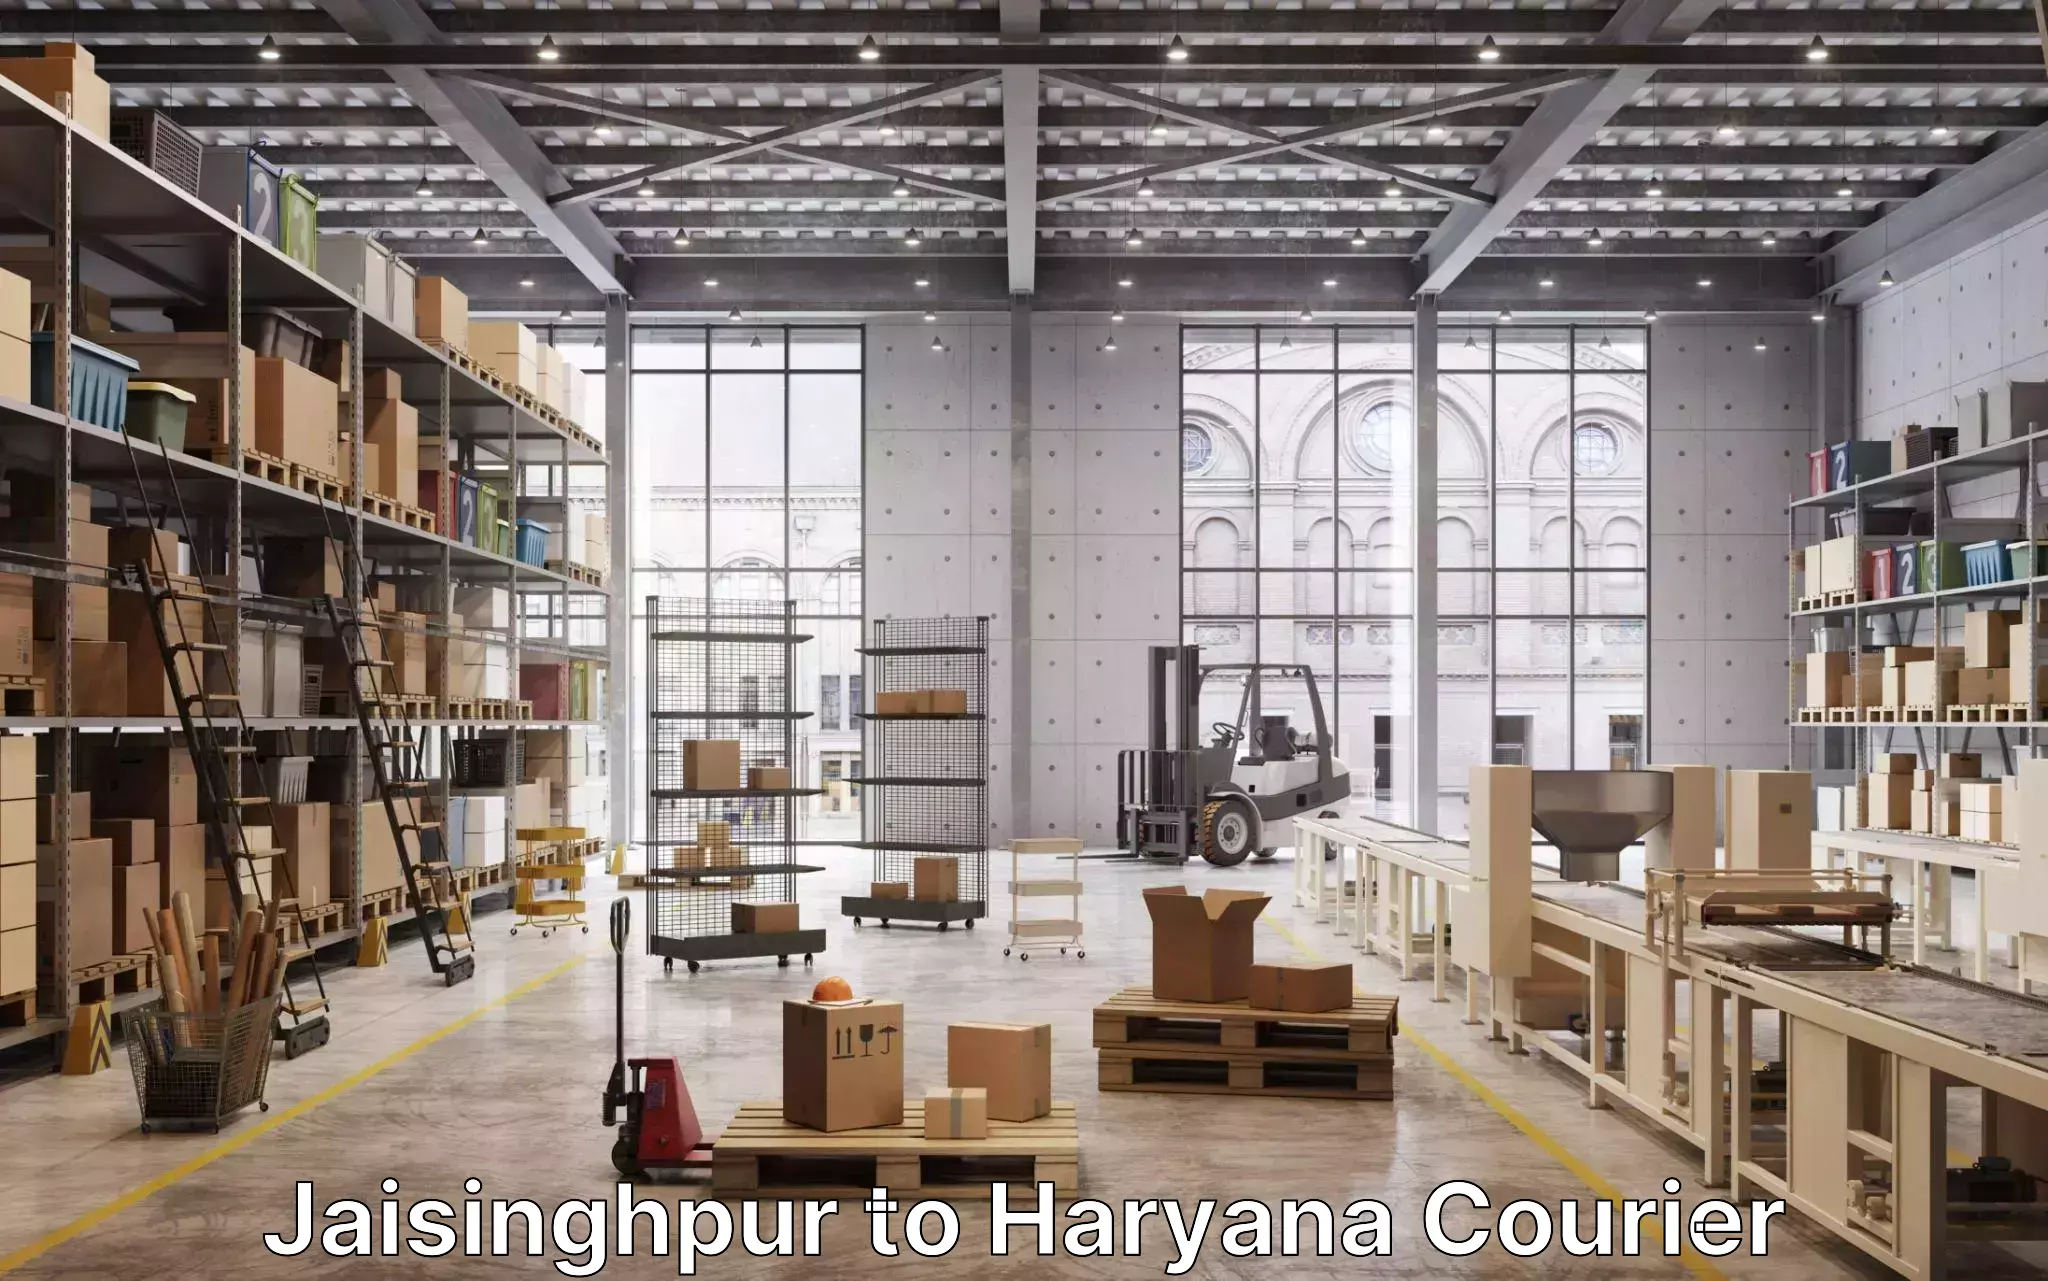 Quality moving company Jaisinghpur to Chirya